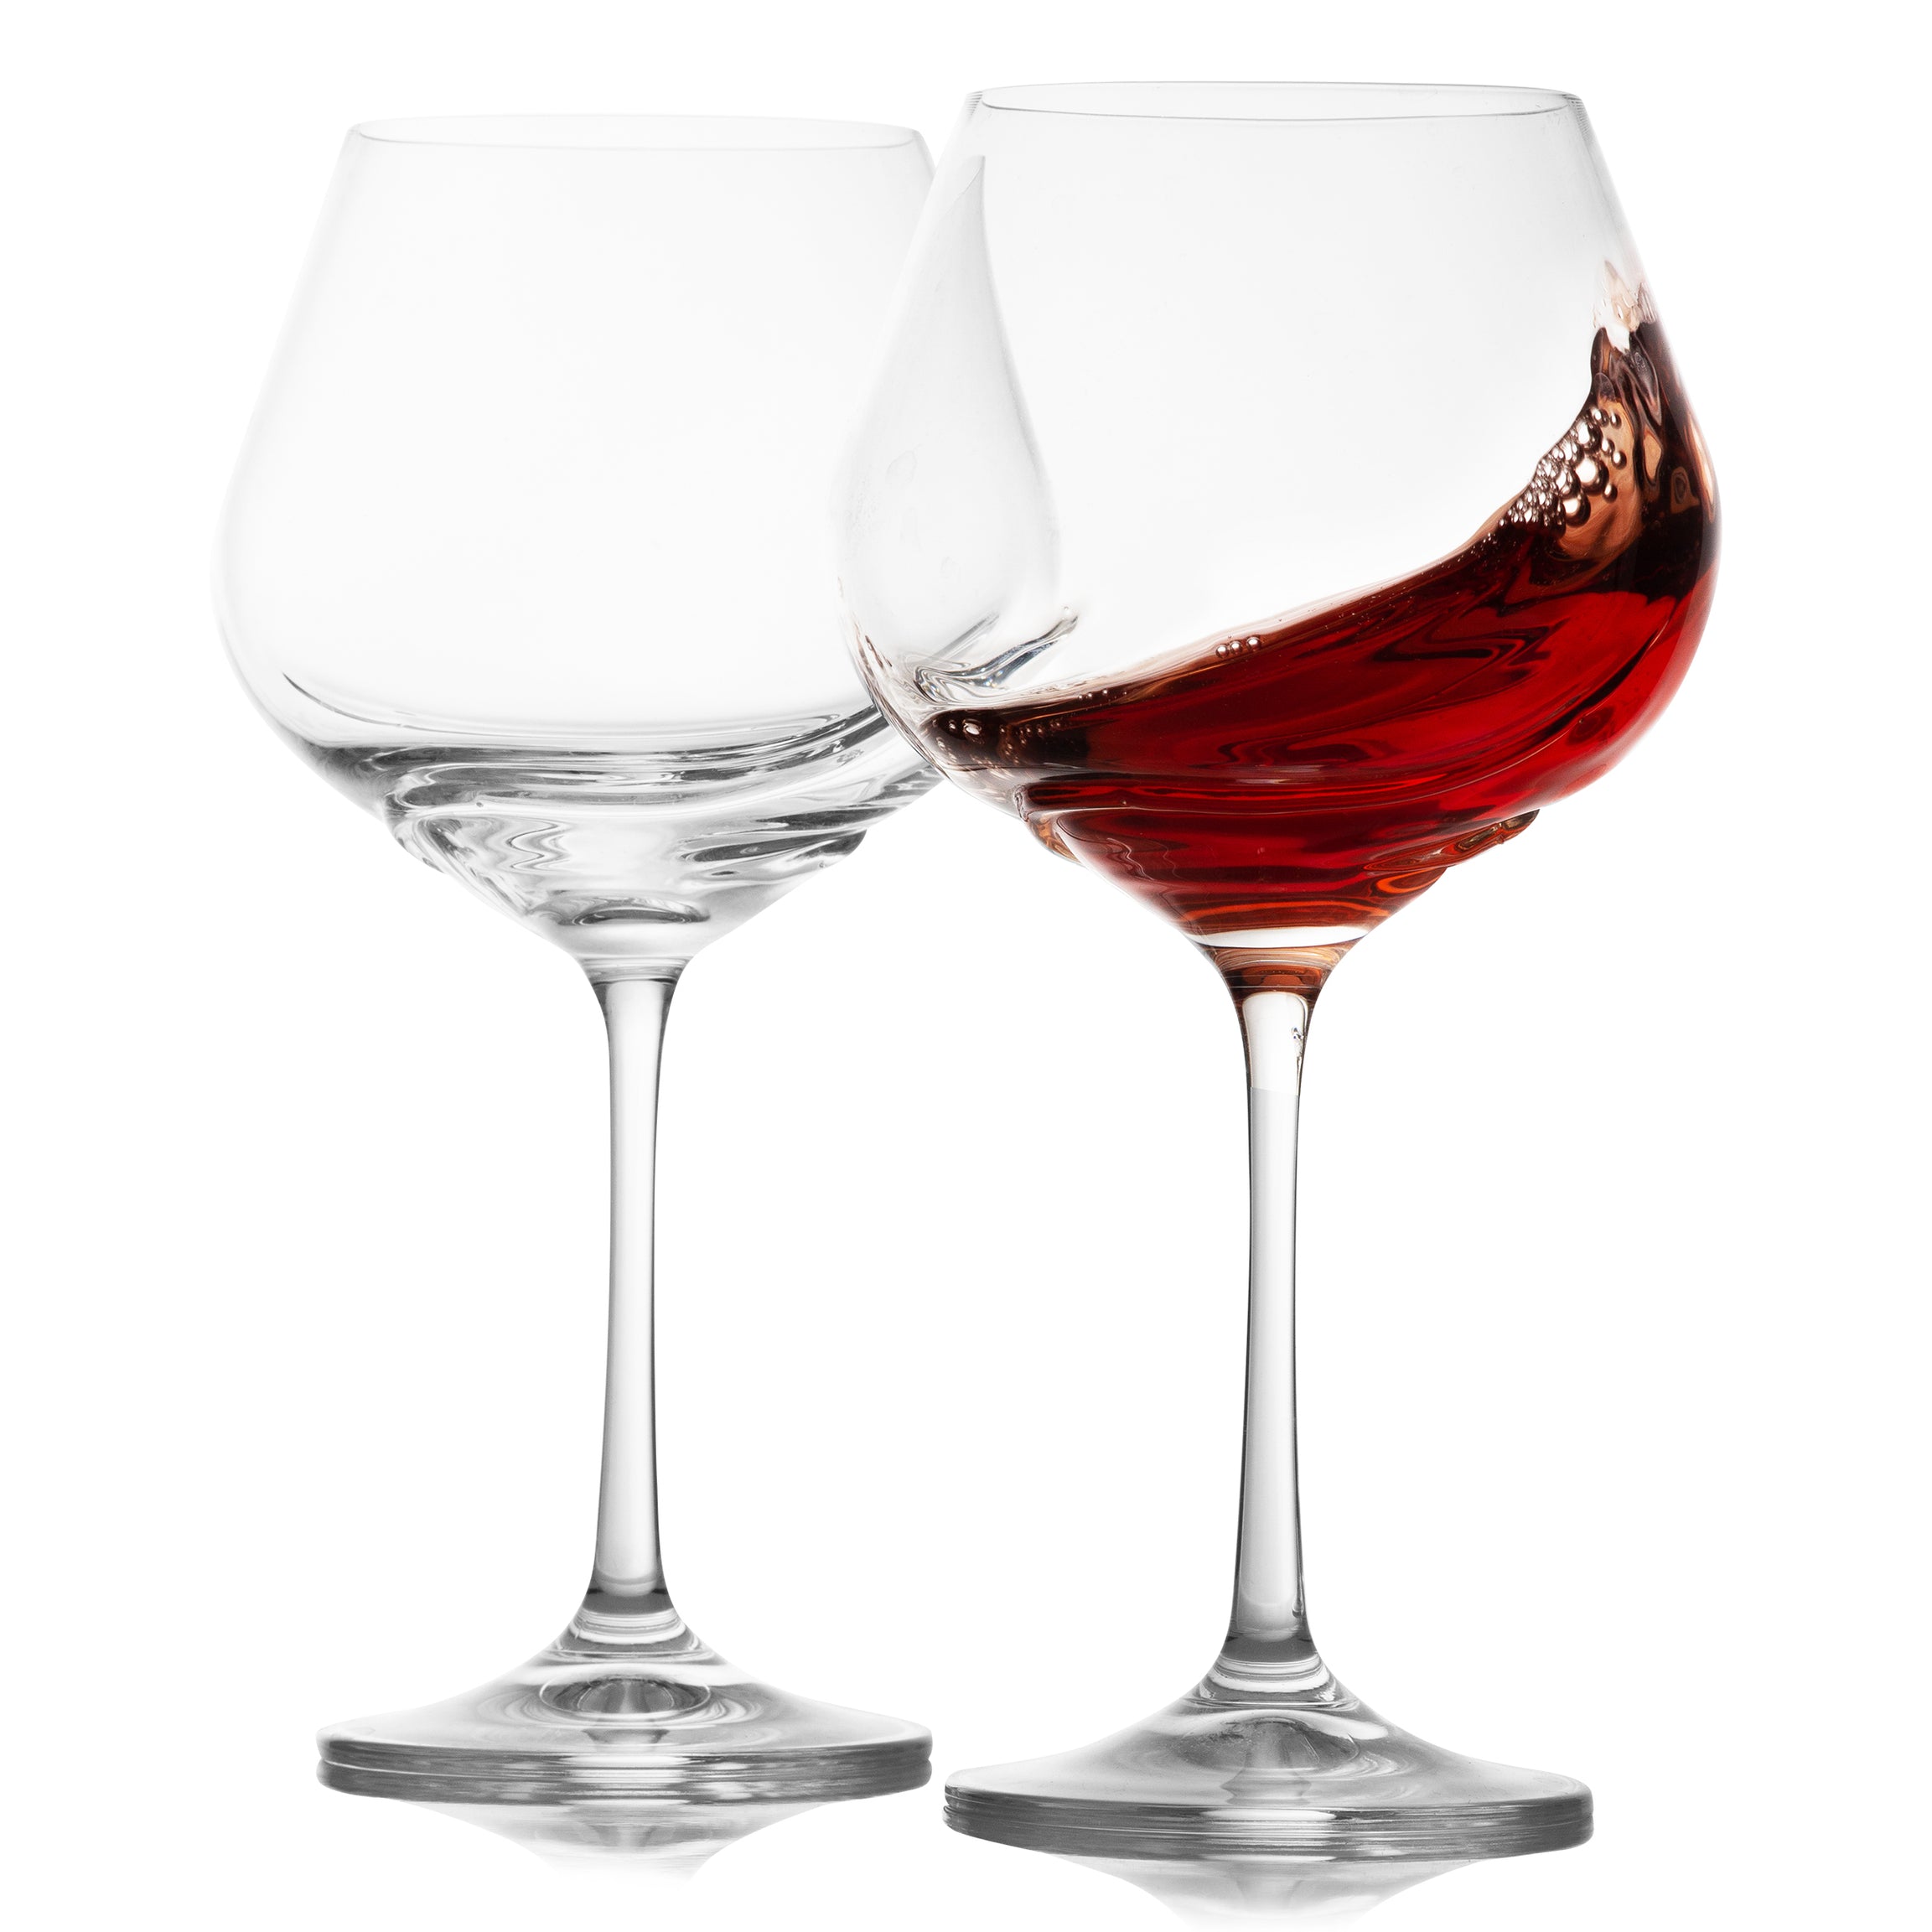 Turbulence red wine glasses set of 2 (19.2 oz)